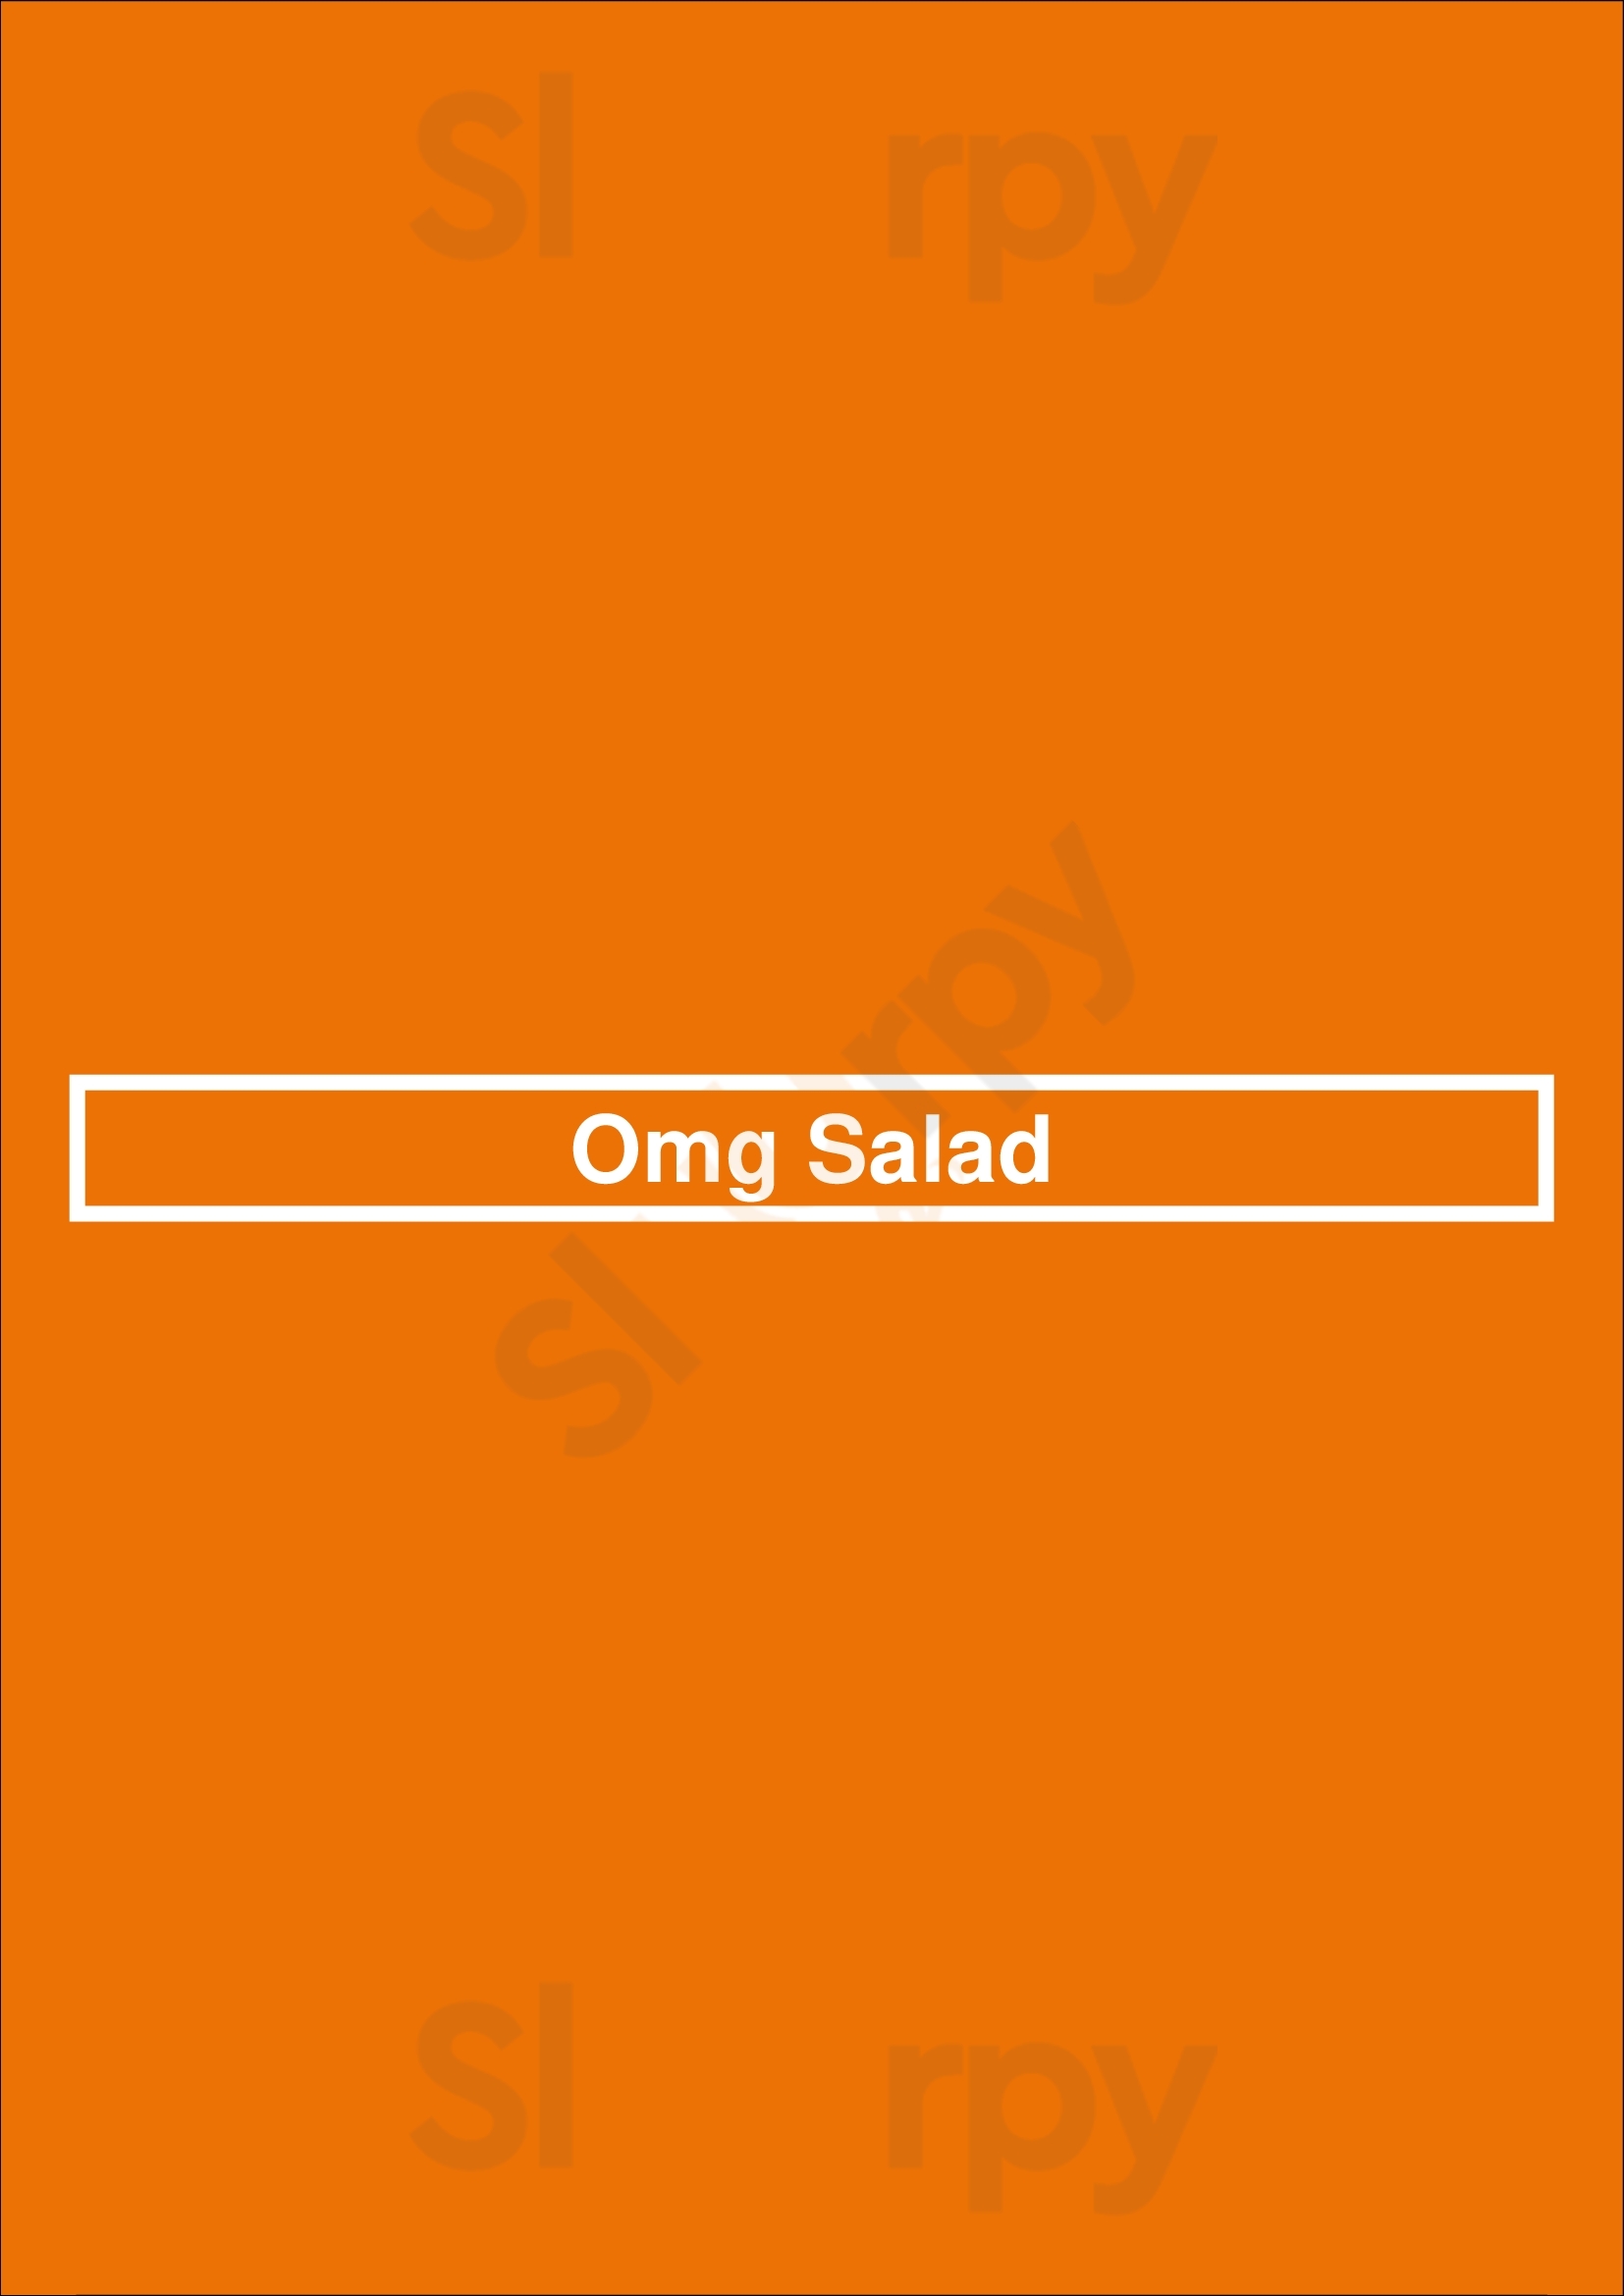 Omg Salad Phoenix Menu - 1